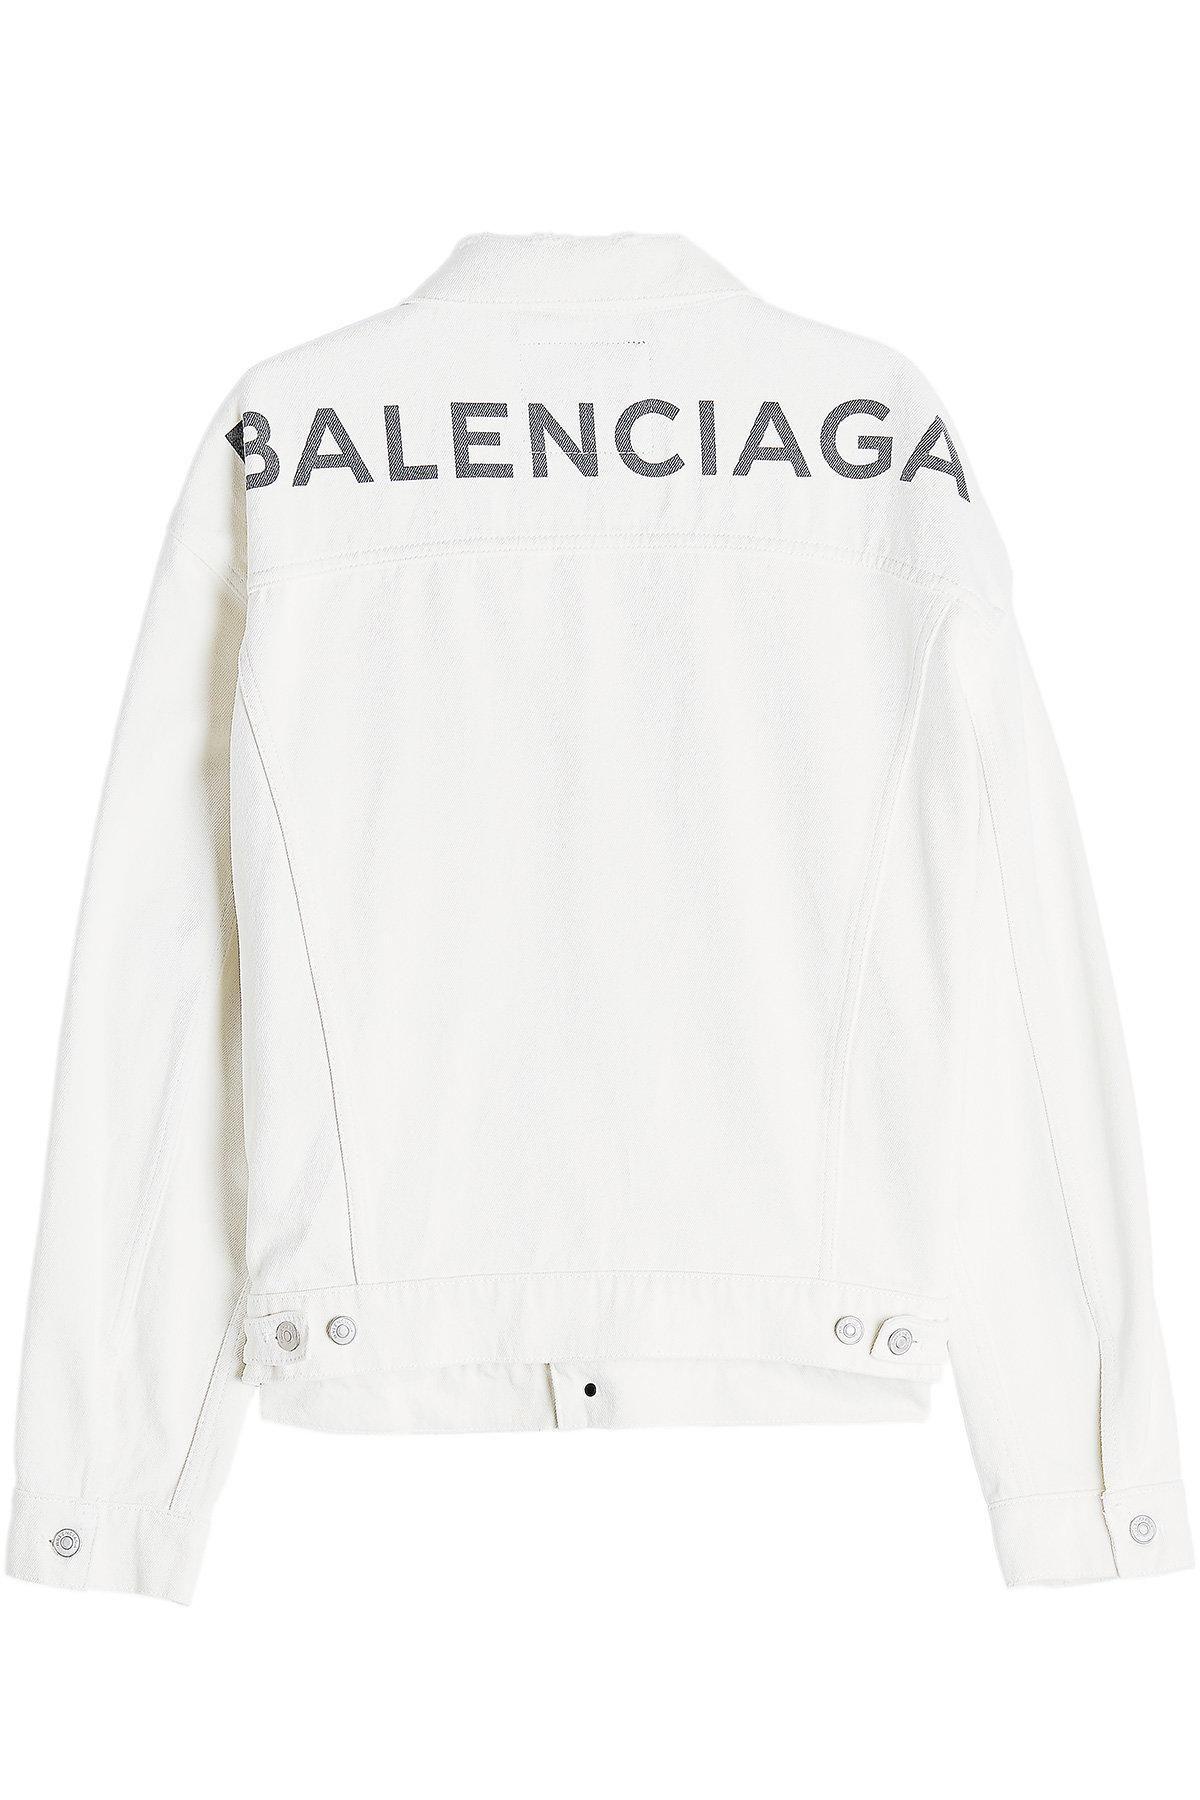 Denim and White Logo - Balenciaga Logo Back Denim Jacket in White - Lyst